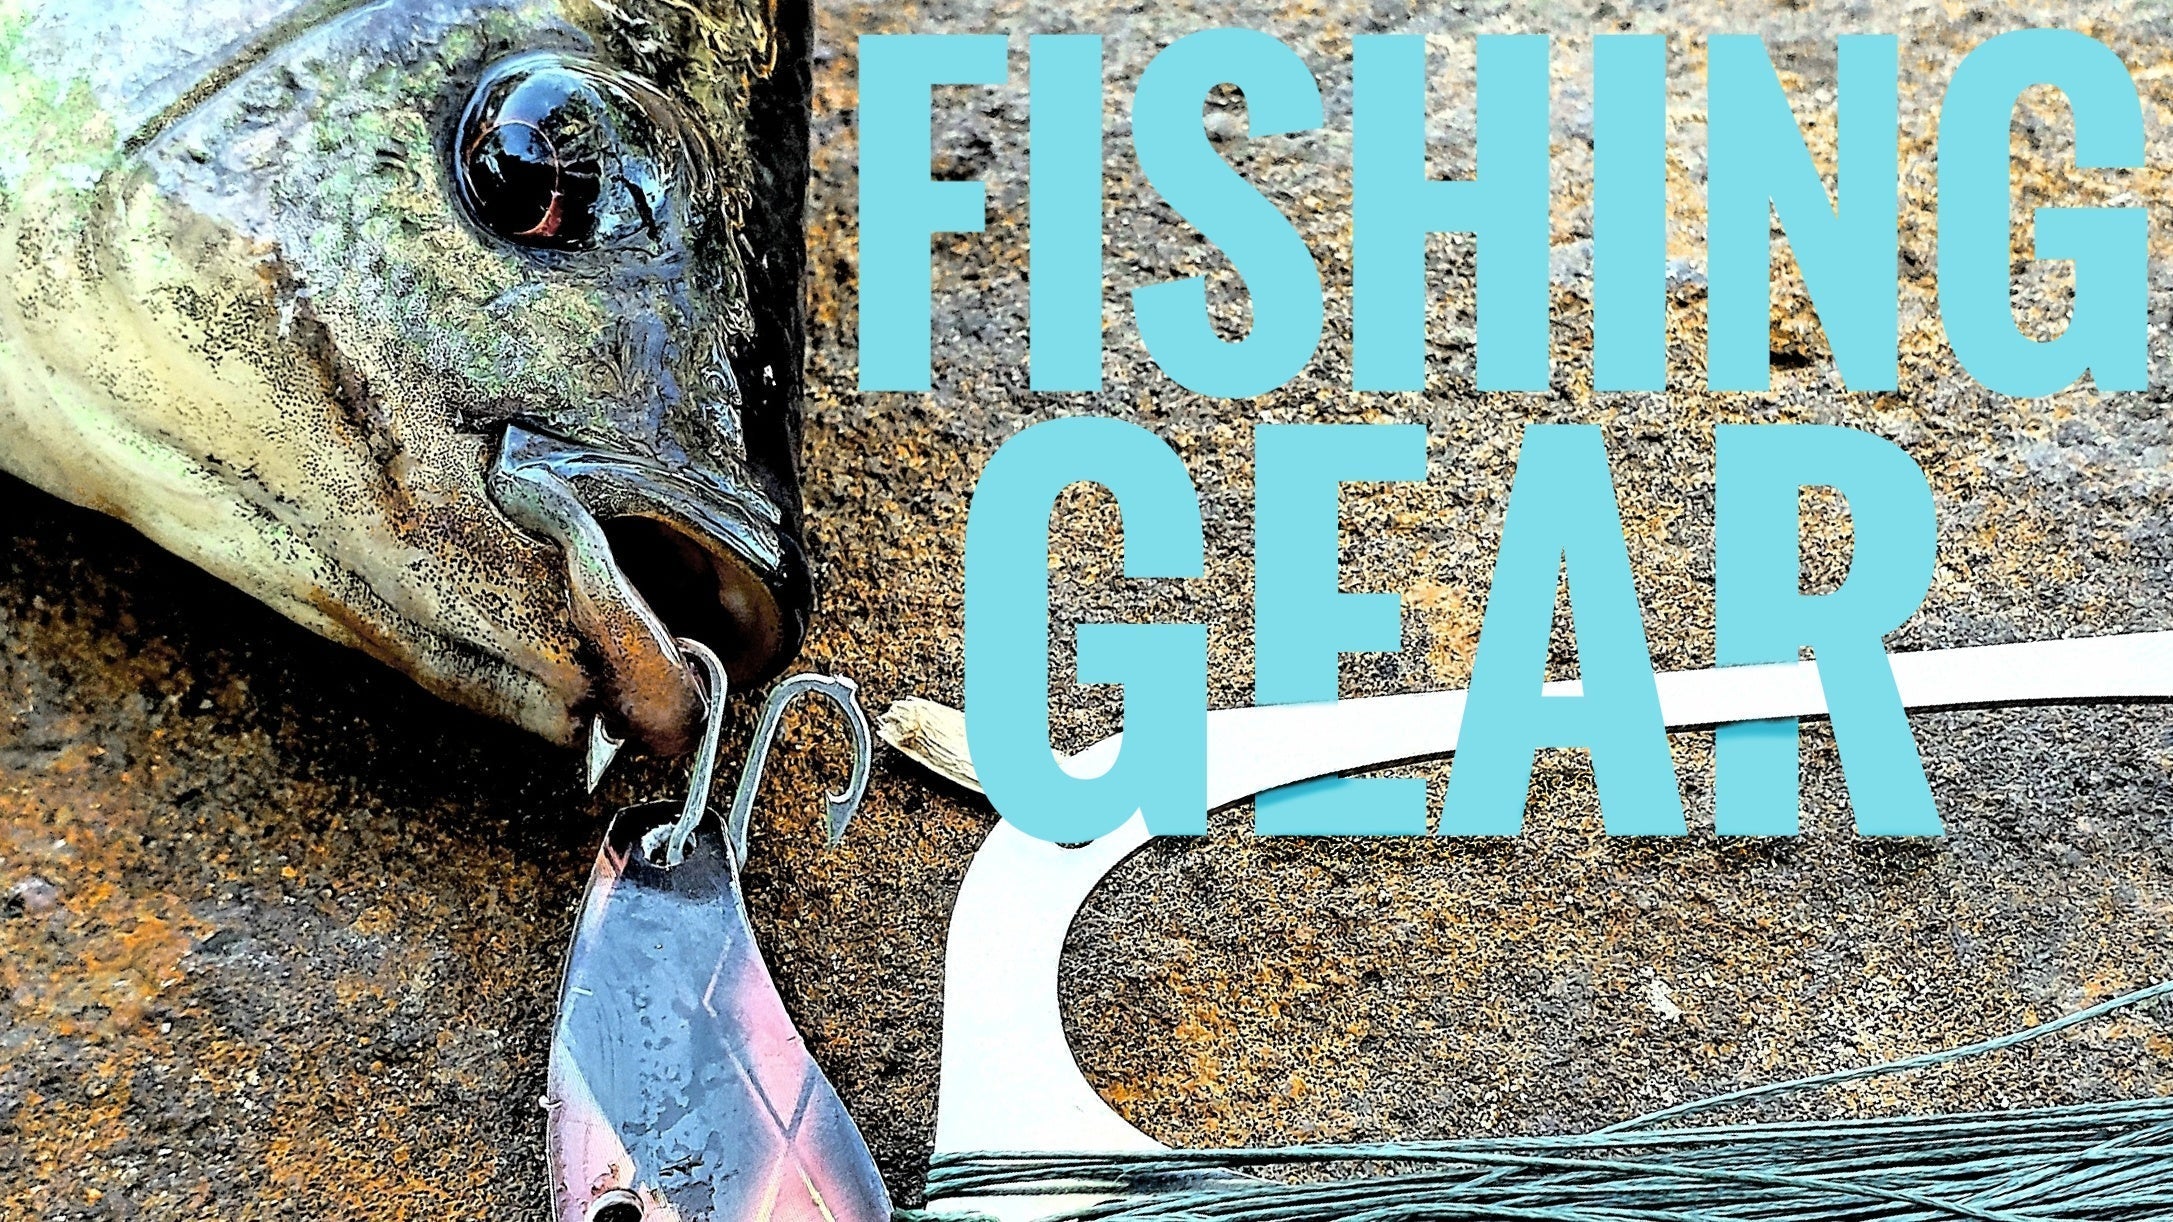 Grim Survival Fishing Kit Line  Pocket Fishing Kit – Tagged card –  Grimworkshop